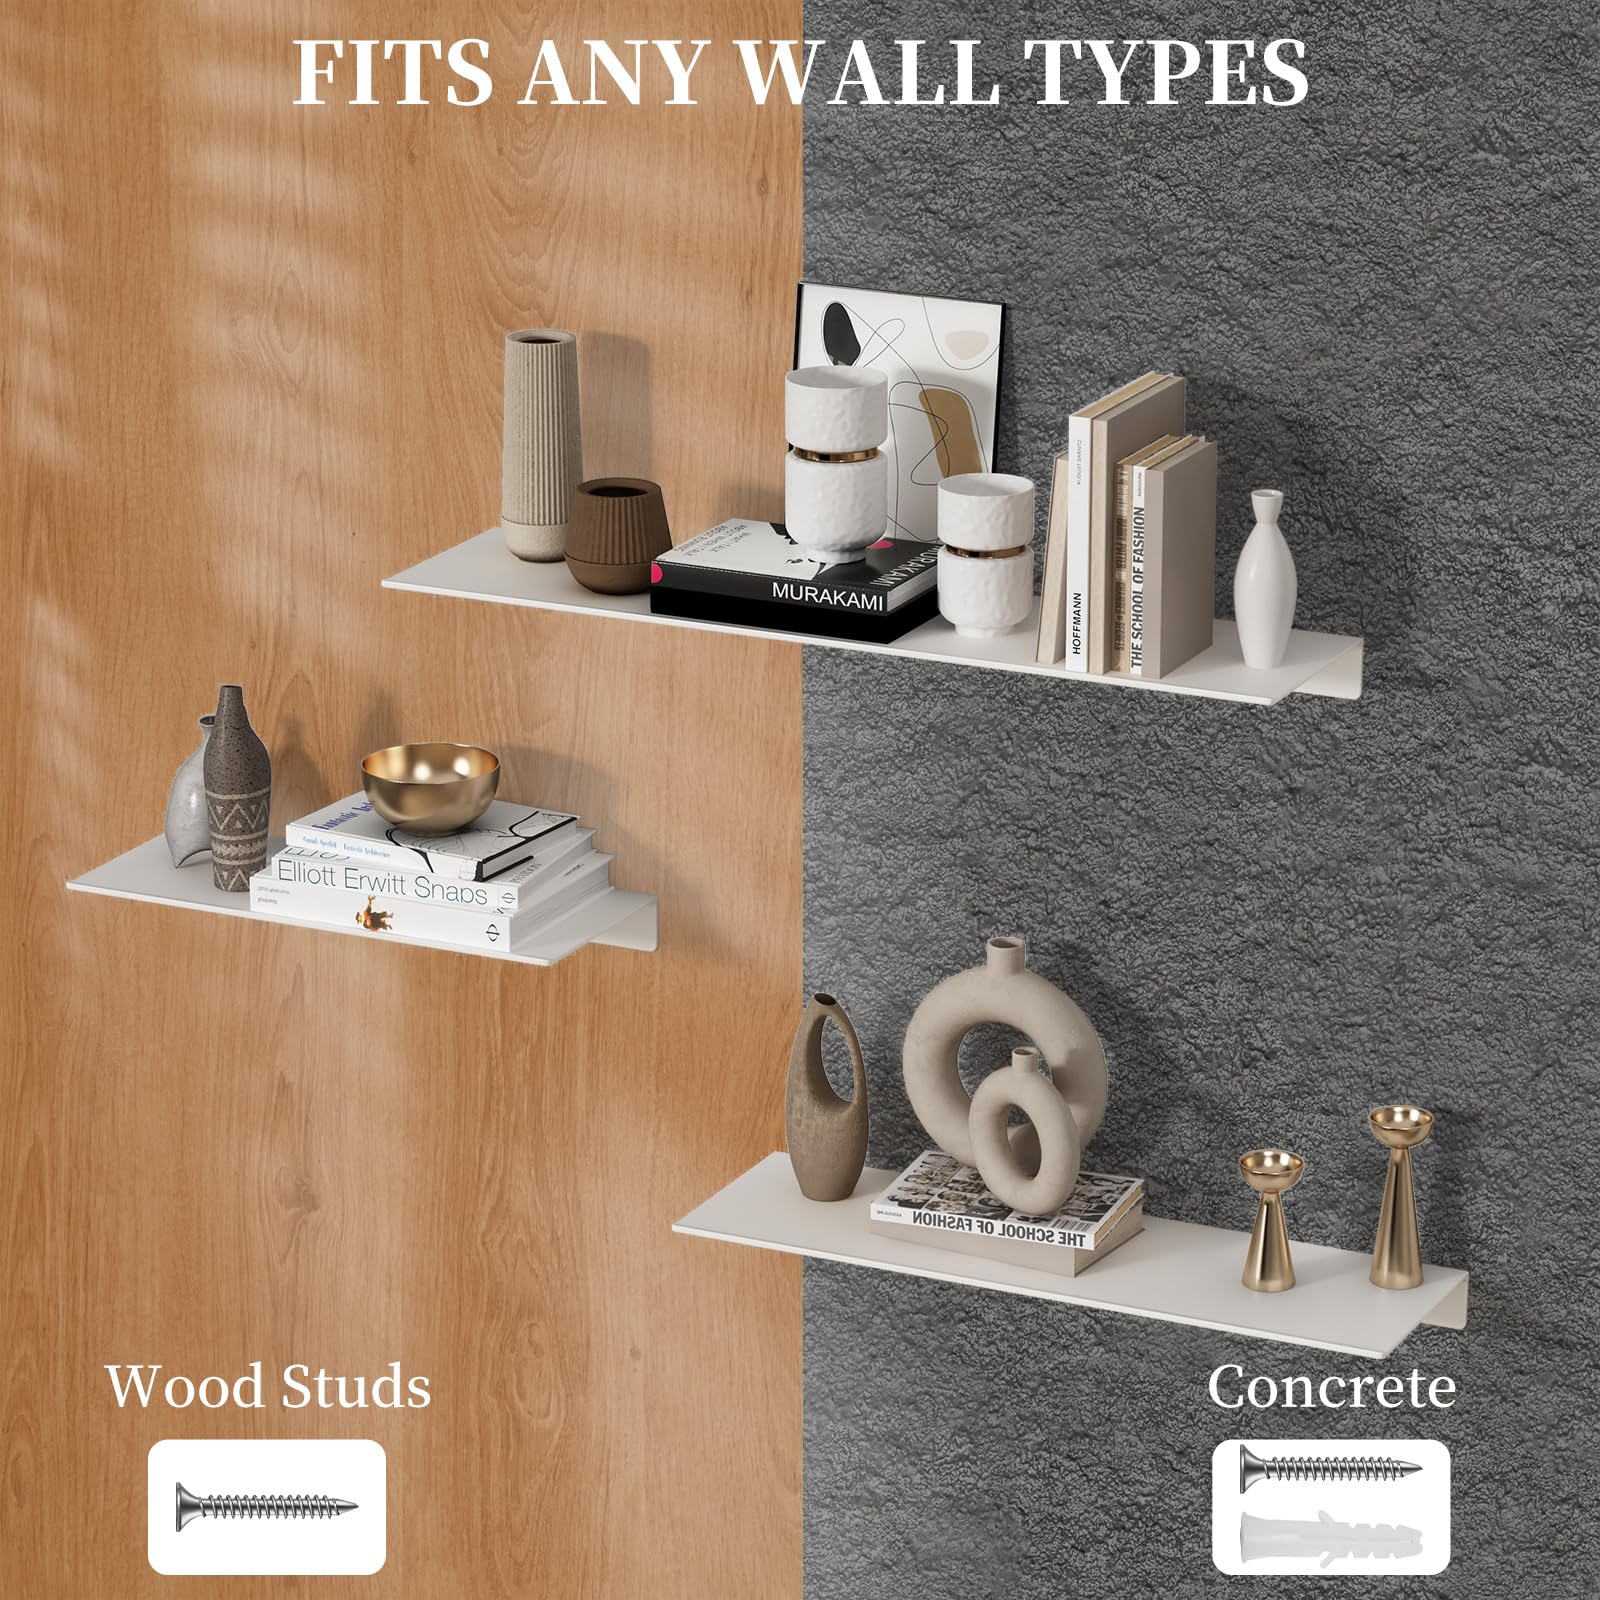 JOOM White Metal Wall Floating Shelf - Metal Wall Shelf- Small Bathroom Shelf-Display Shelves for Wall Storage (White, 16 in)